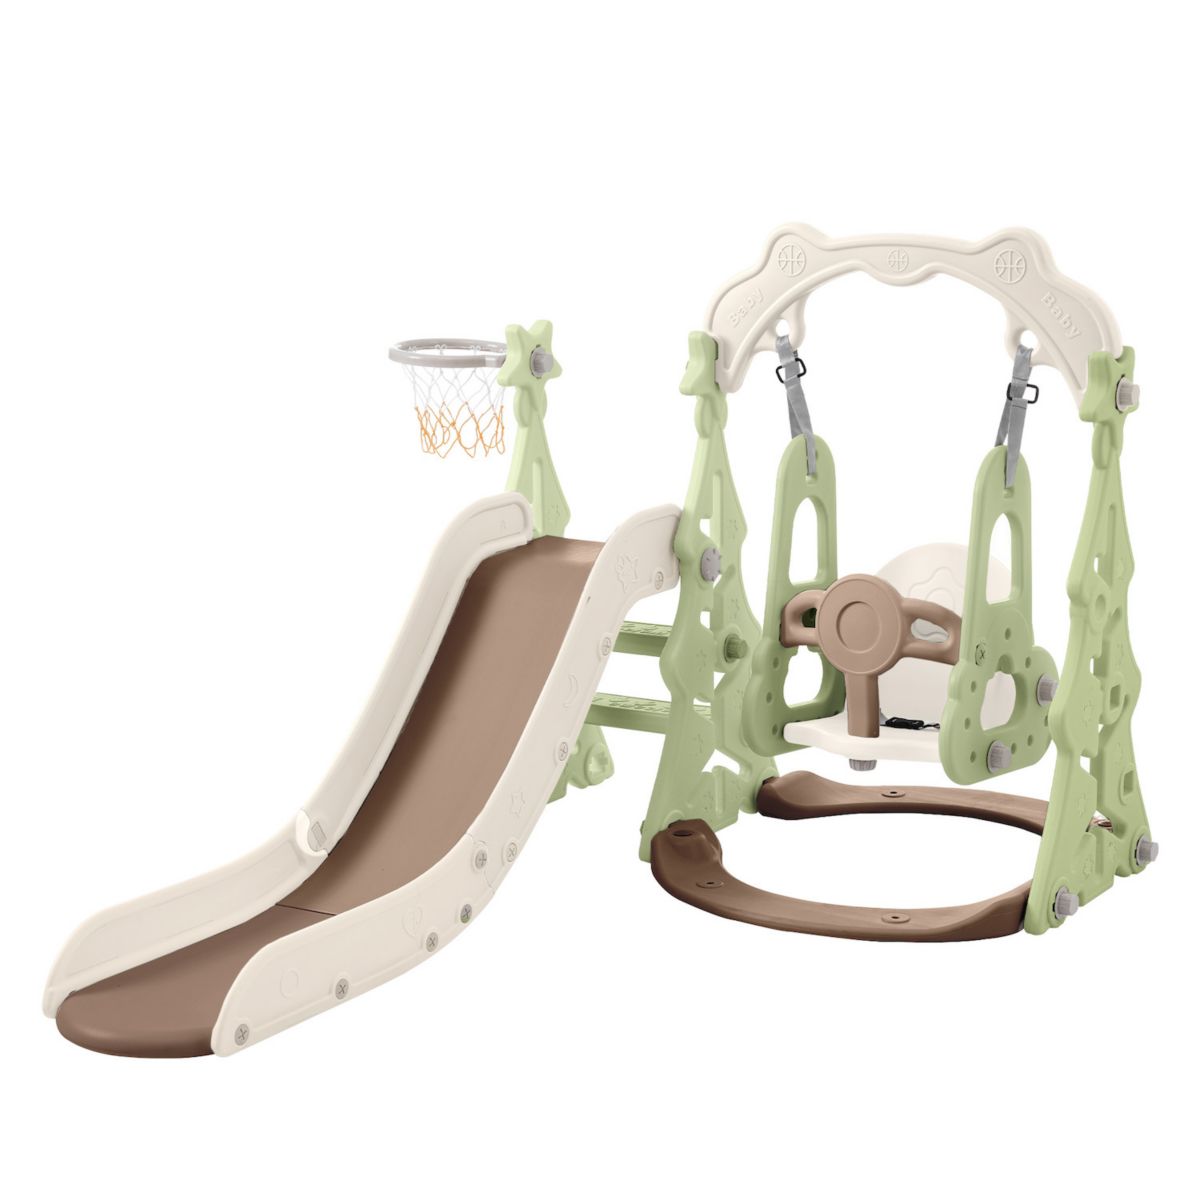 Merax Toddler Slide And Swing Set 3 In 1，kids Playground Climber Swing Playset Merax